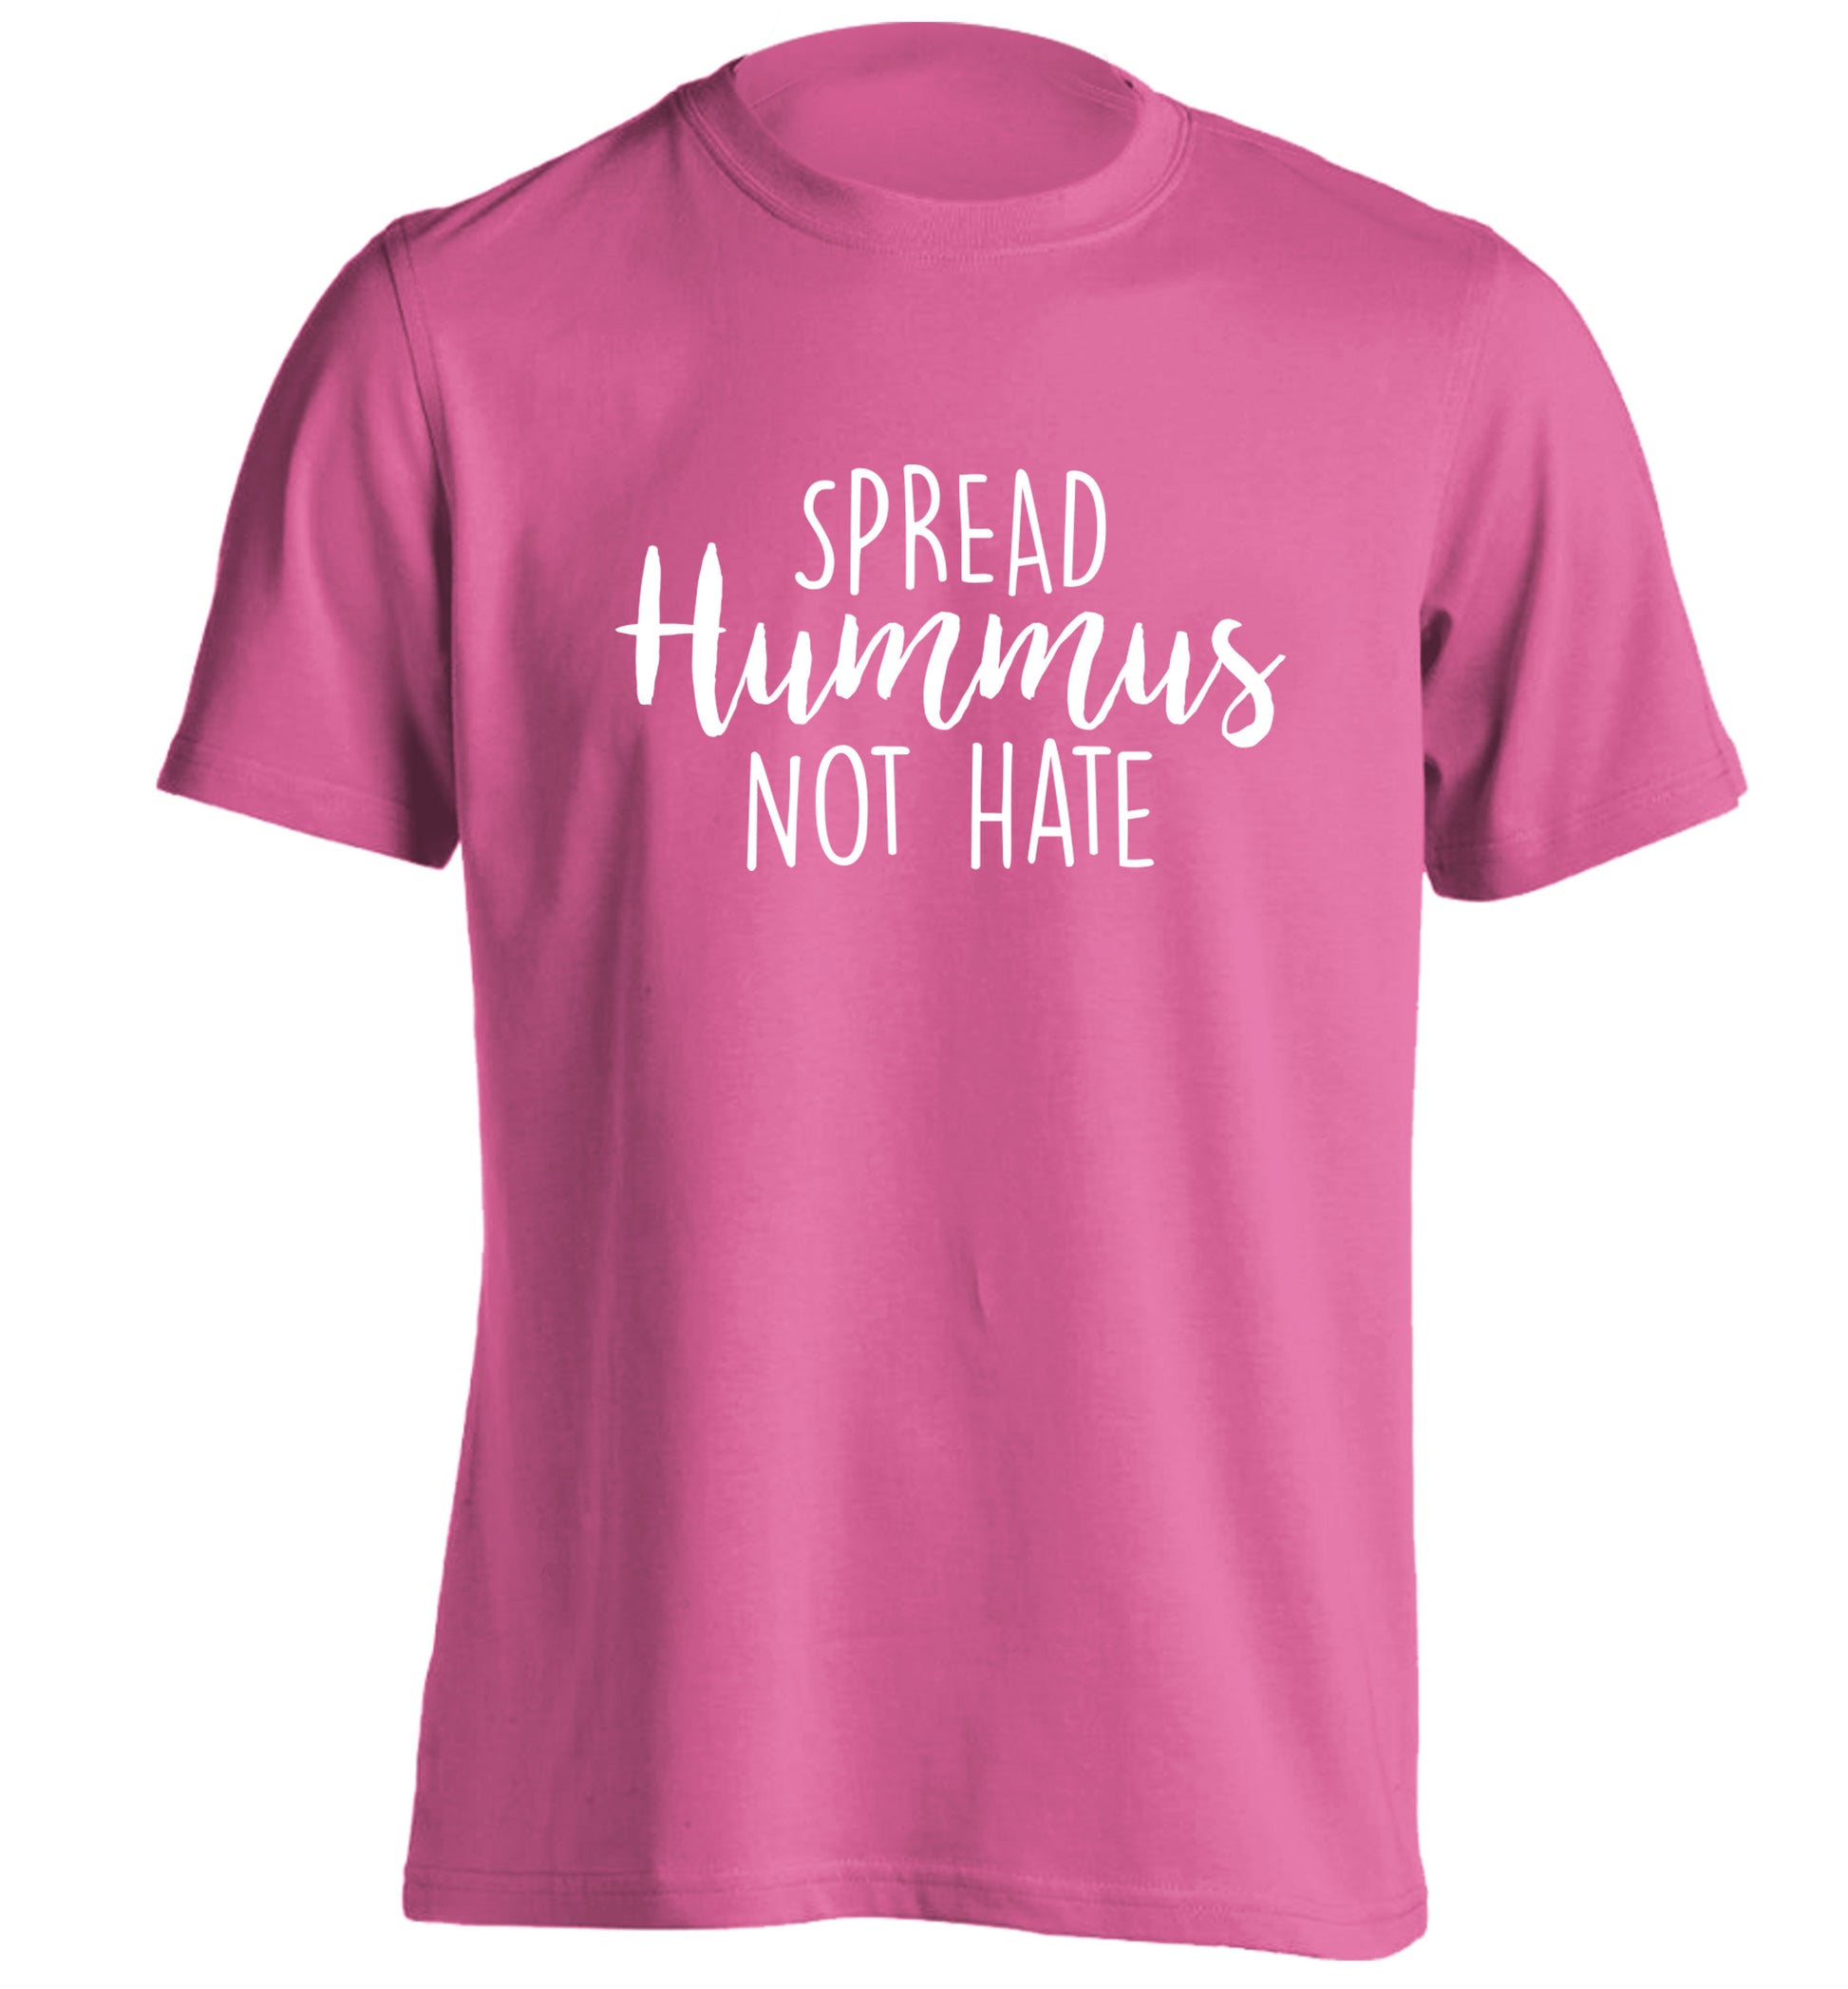 Spread hummus not hate script text adults unisex pink Tshirt 2XL